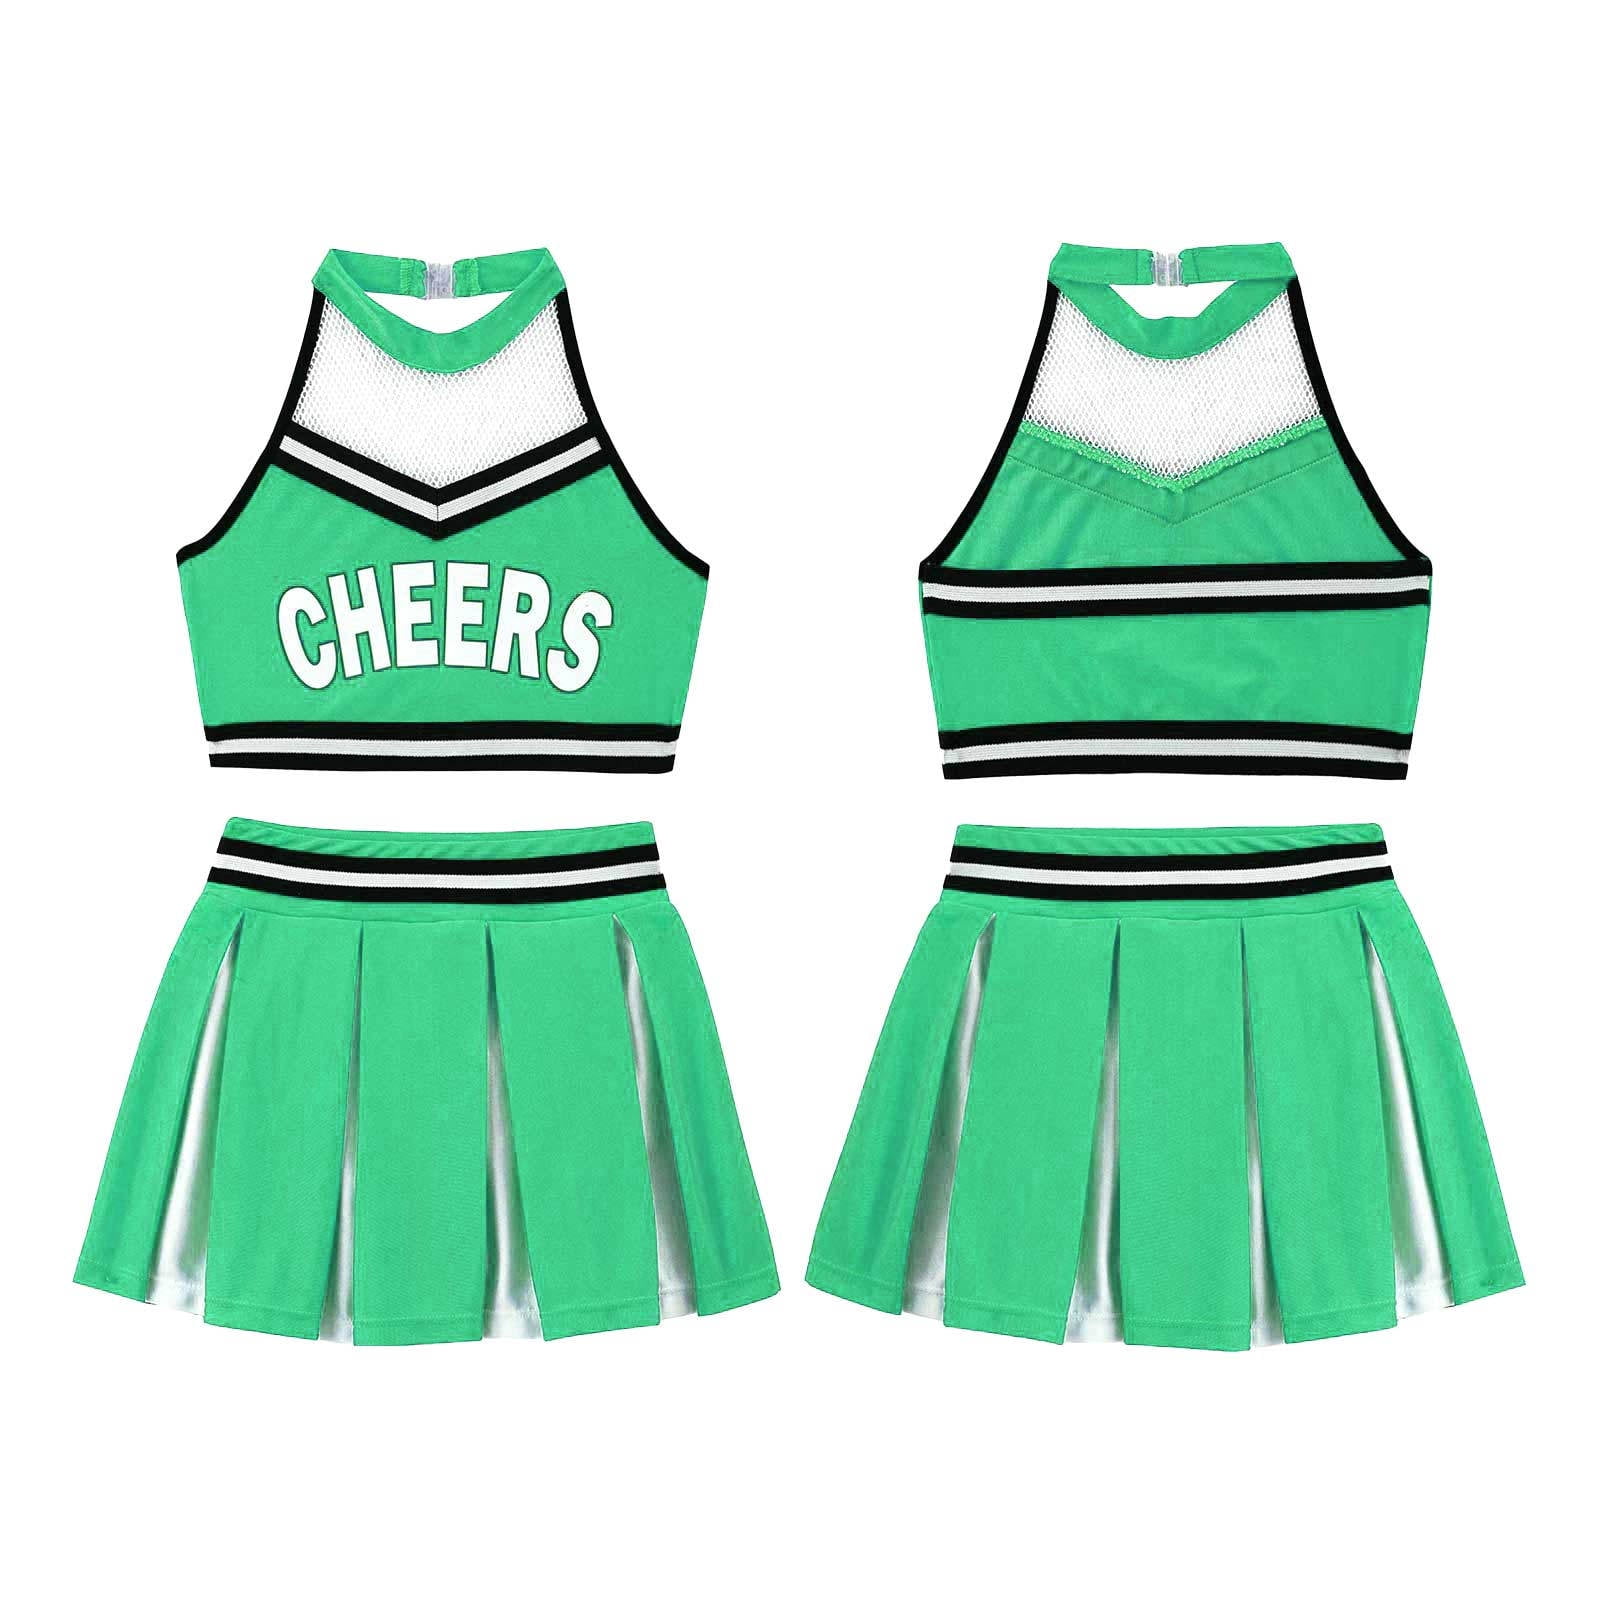 inhzoy Kids Girls Cheer Leader Costume Cheerleading Uniform Outfit ...